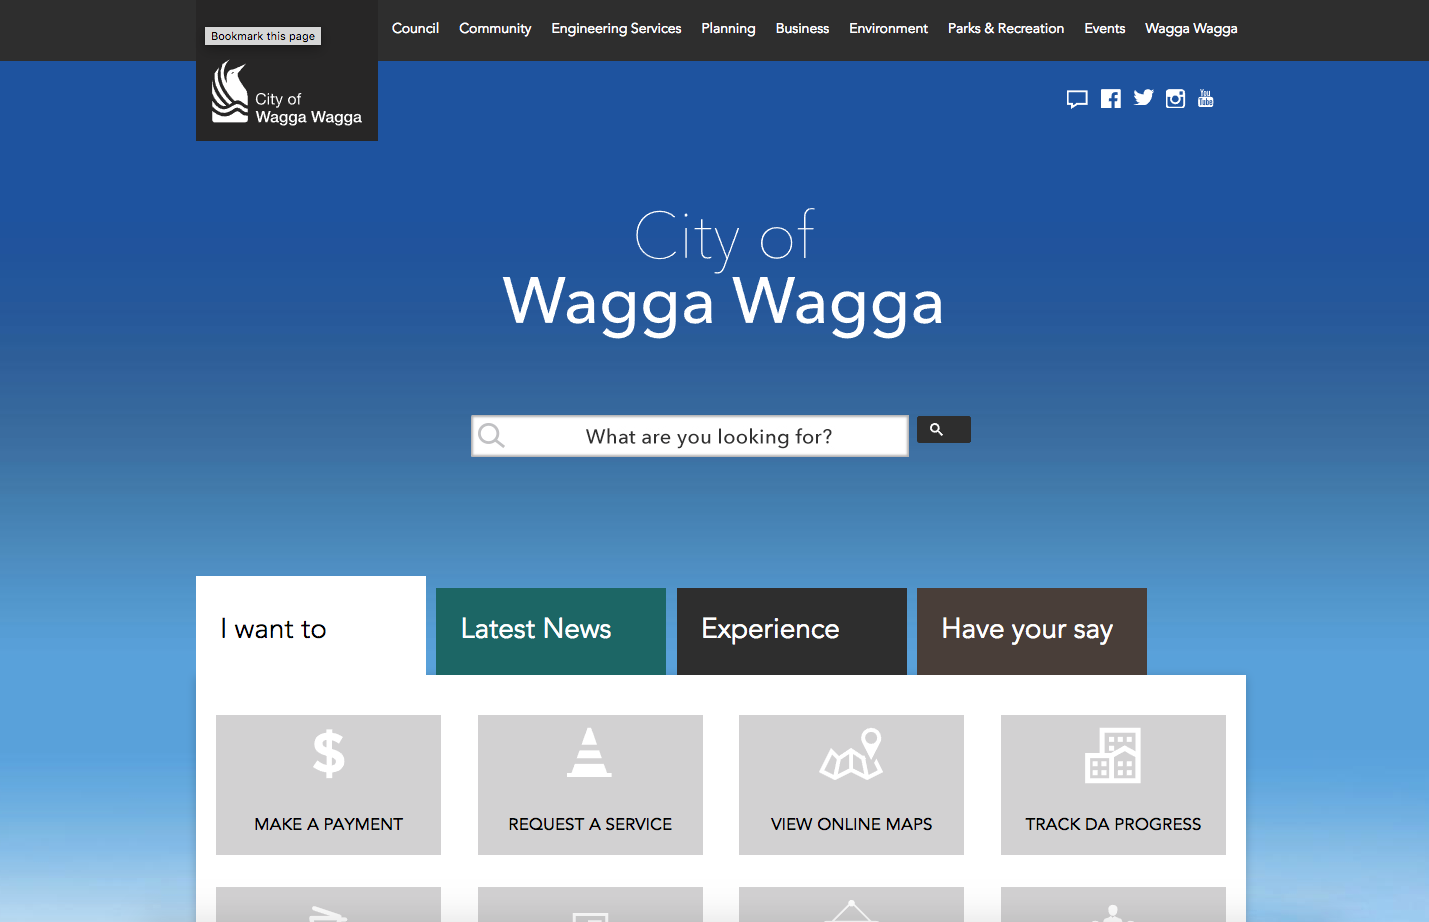 Wagga Wagga City Council - https://www.wagga.nsw.gov.au/